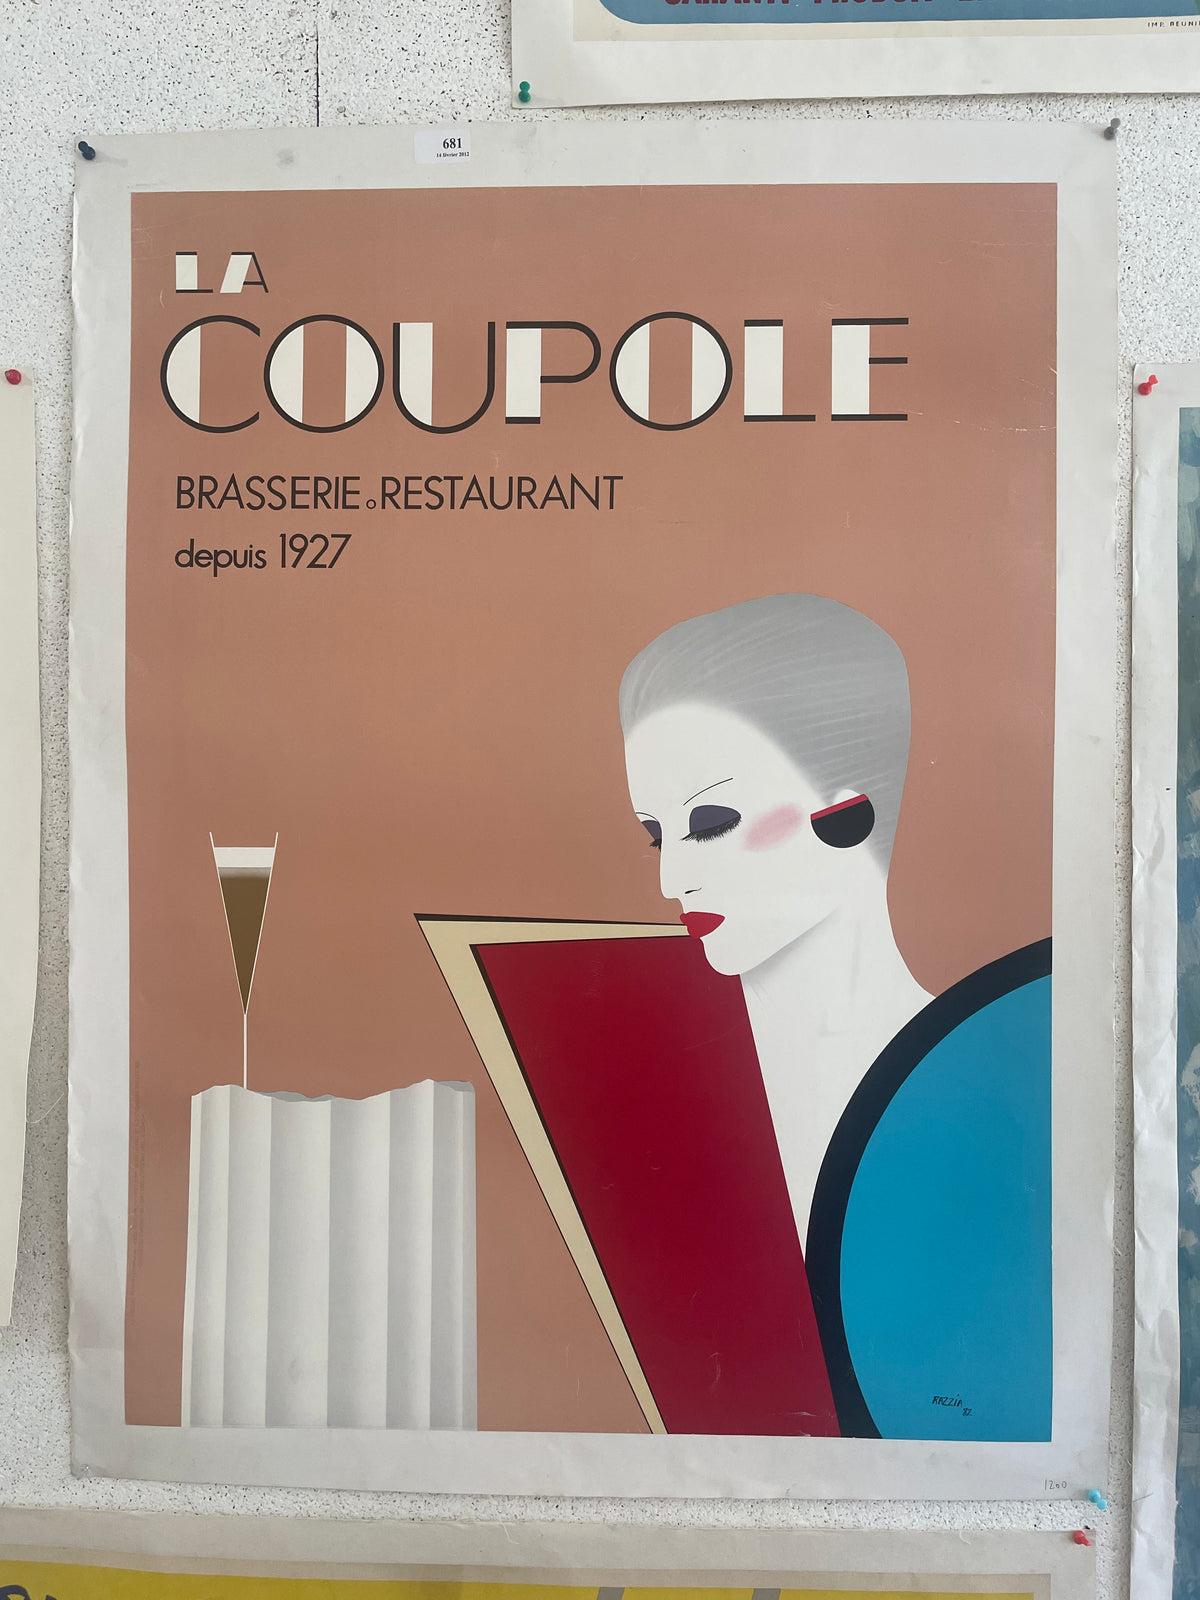 La Coupole by Razzia